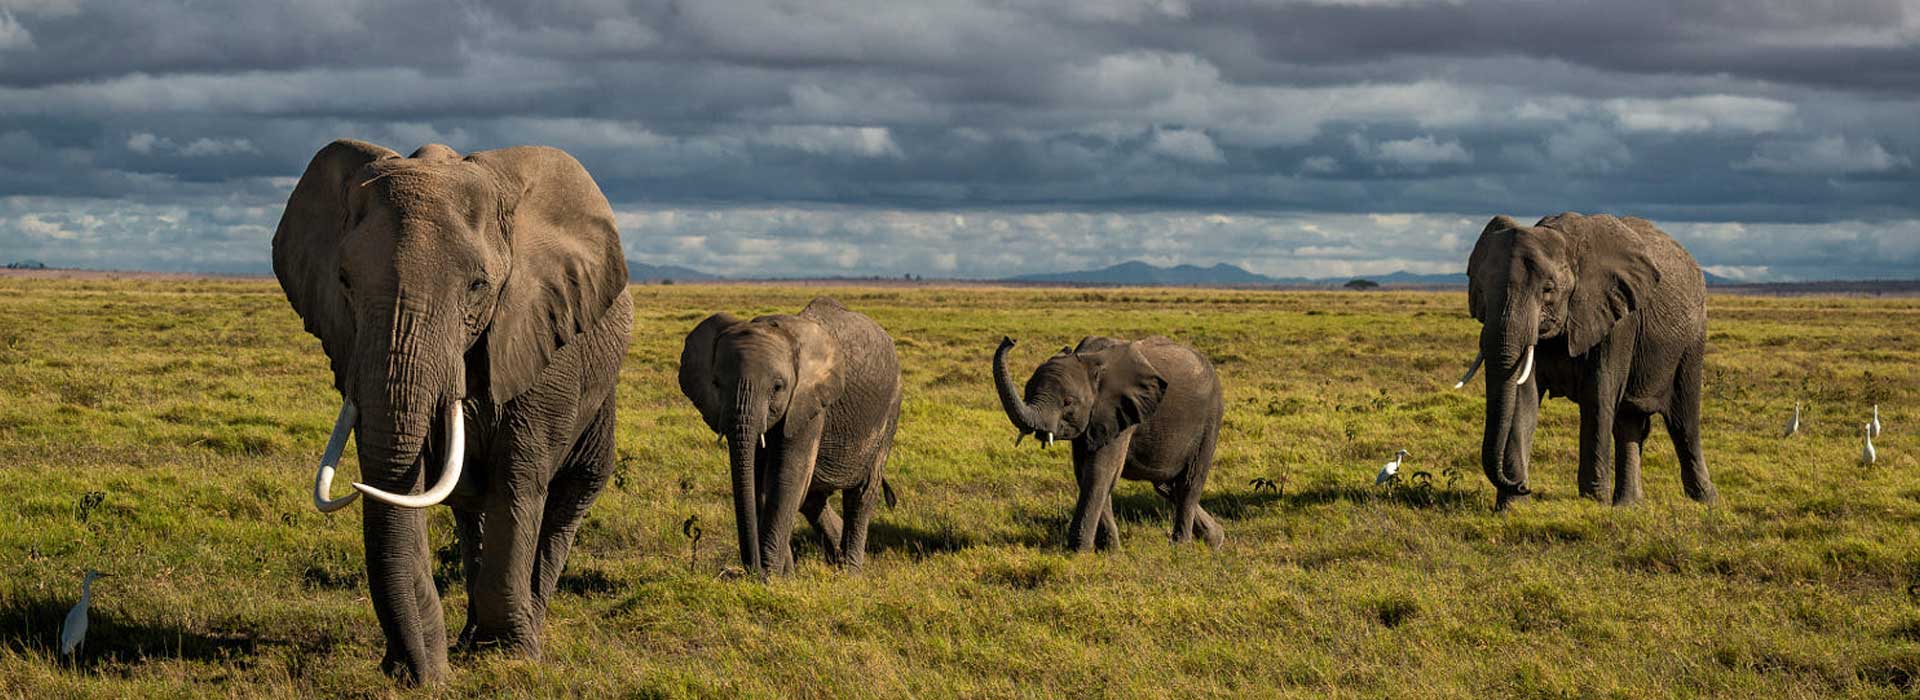 What Should I Expect On A Kenya Safari?